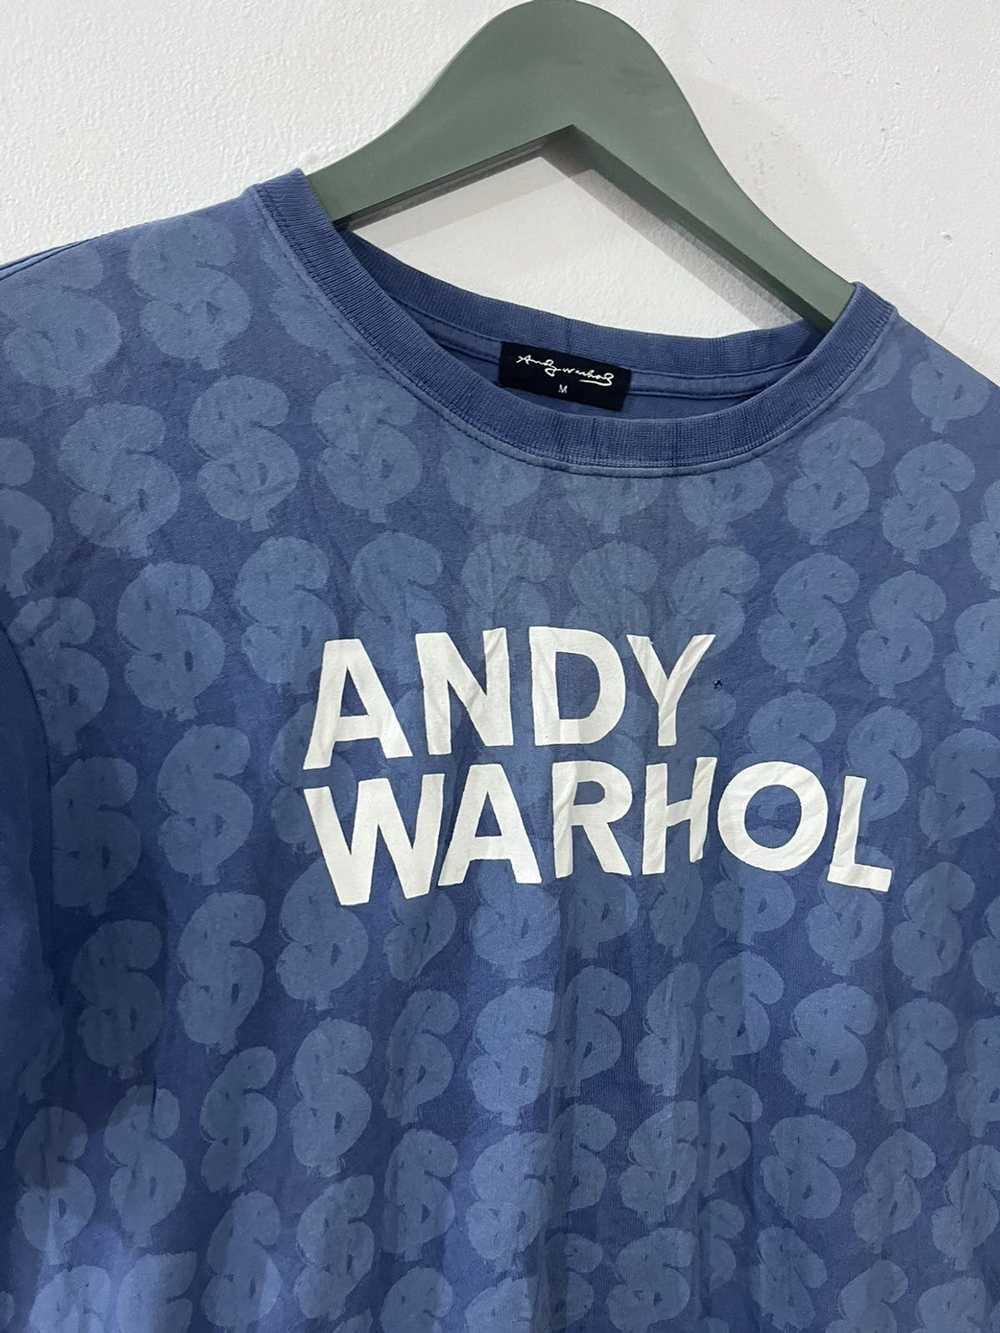 Andy Warhol × Japanese Brand × Uniqlo Andy warhol - image 2